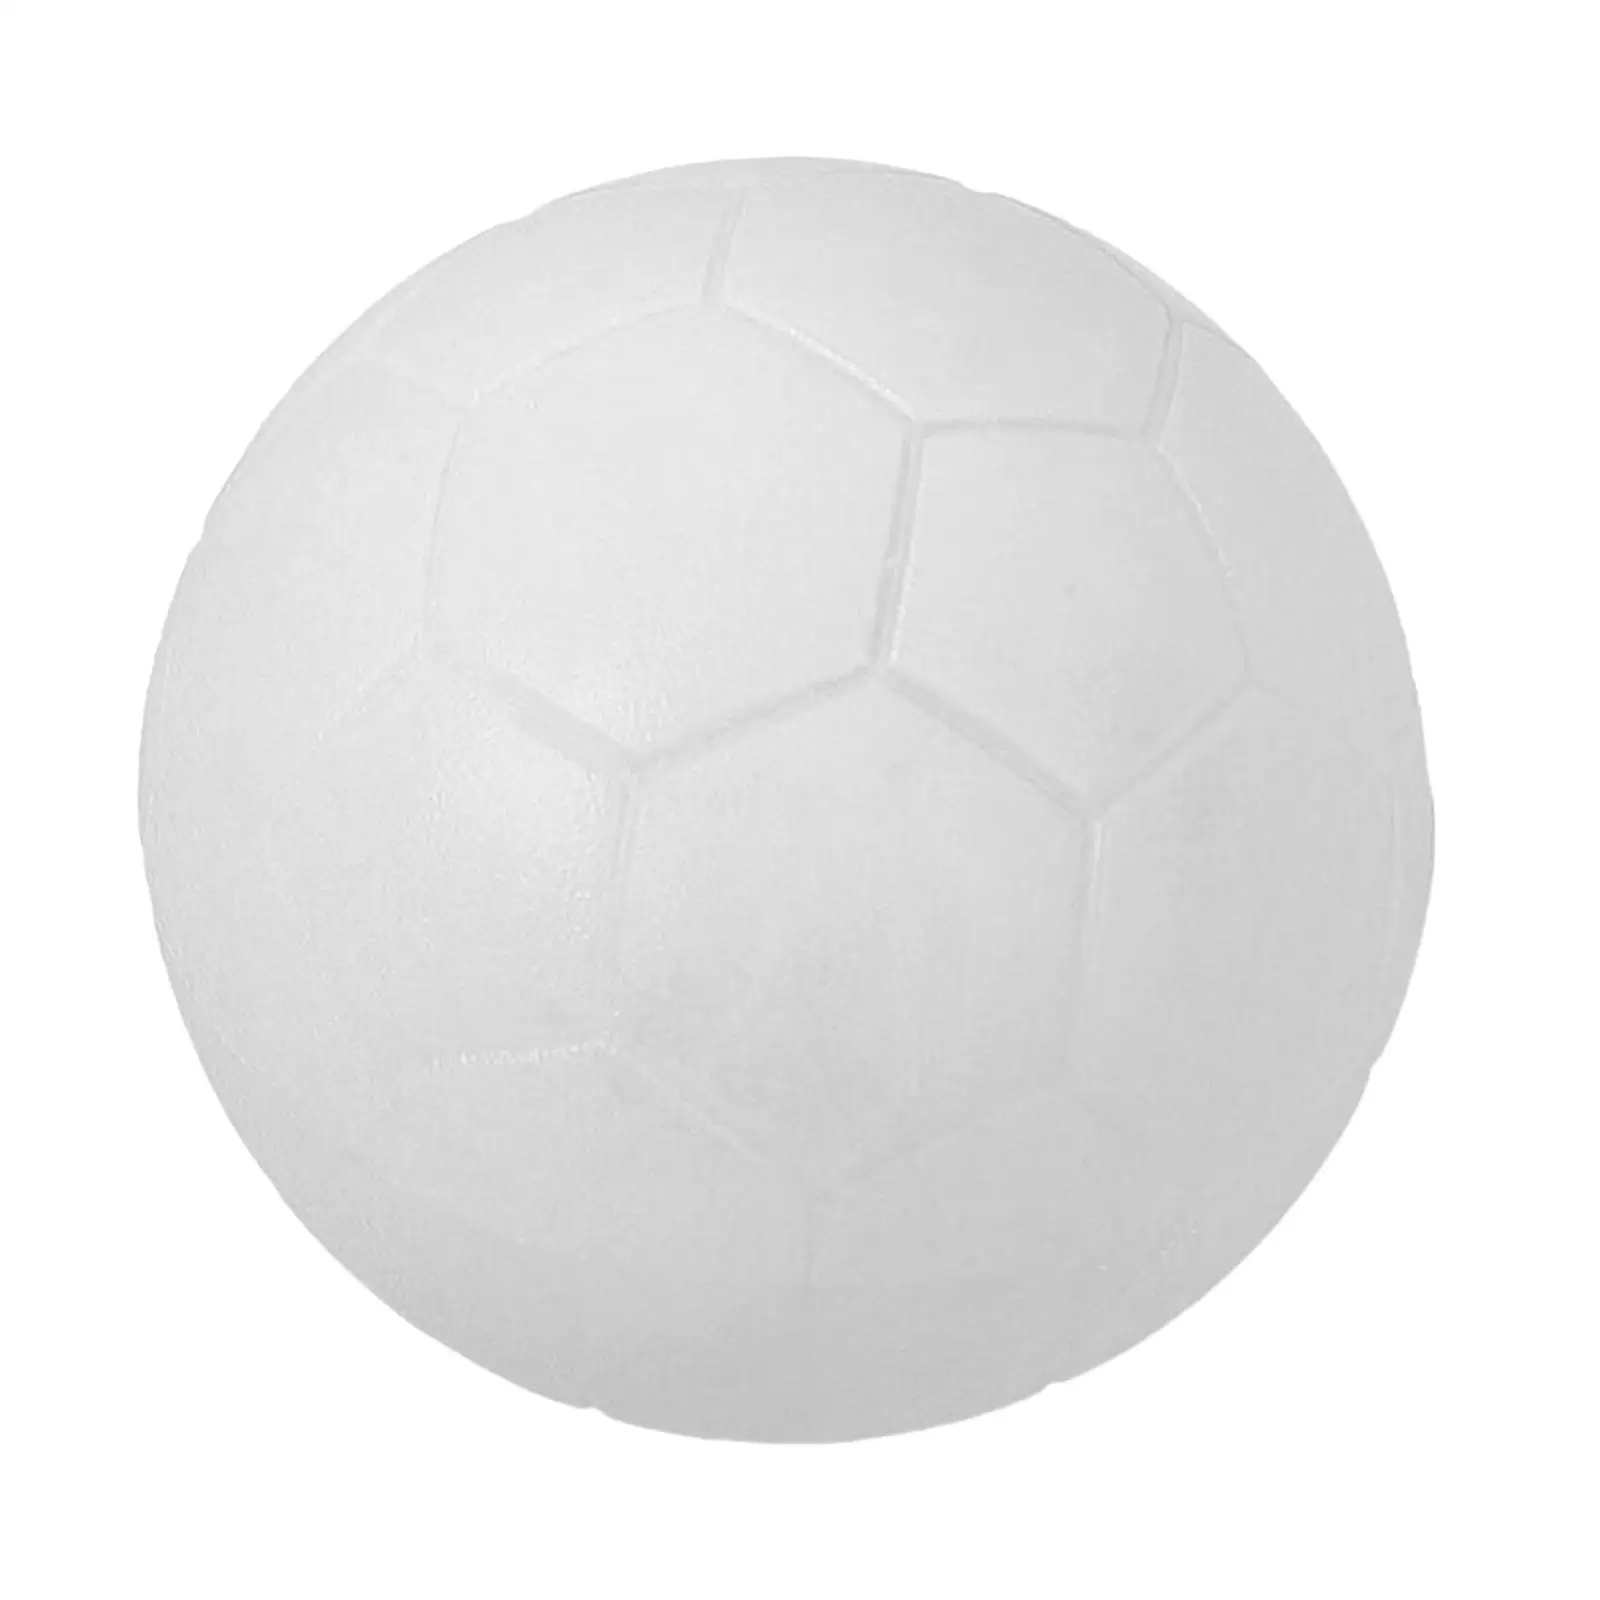 4x Lightweight Table Soccer Balls Size 36mm Football White Mini Standard Size